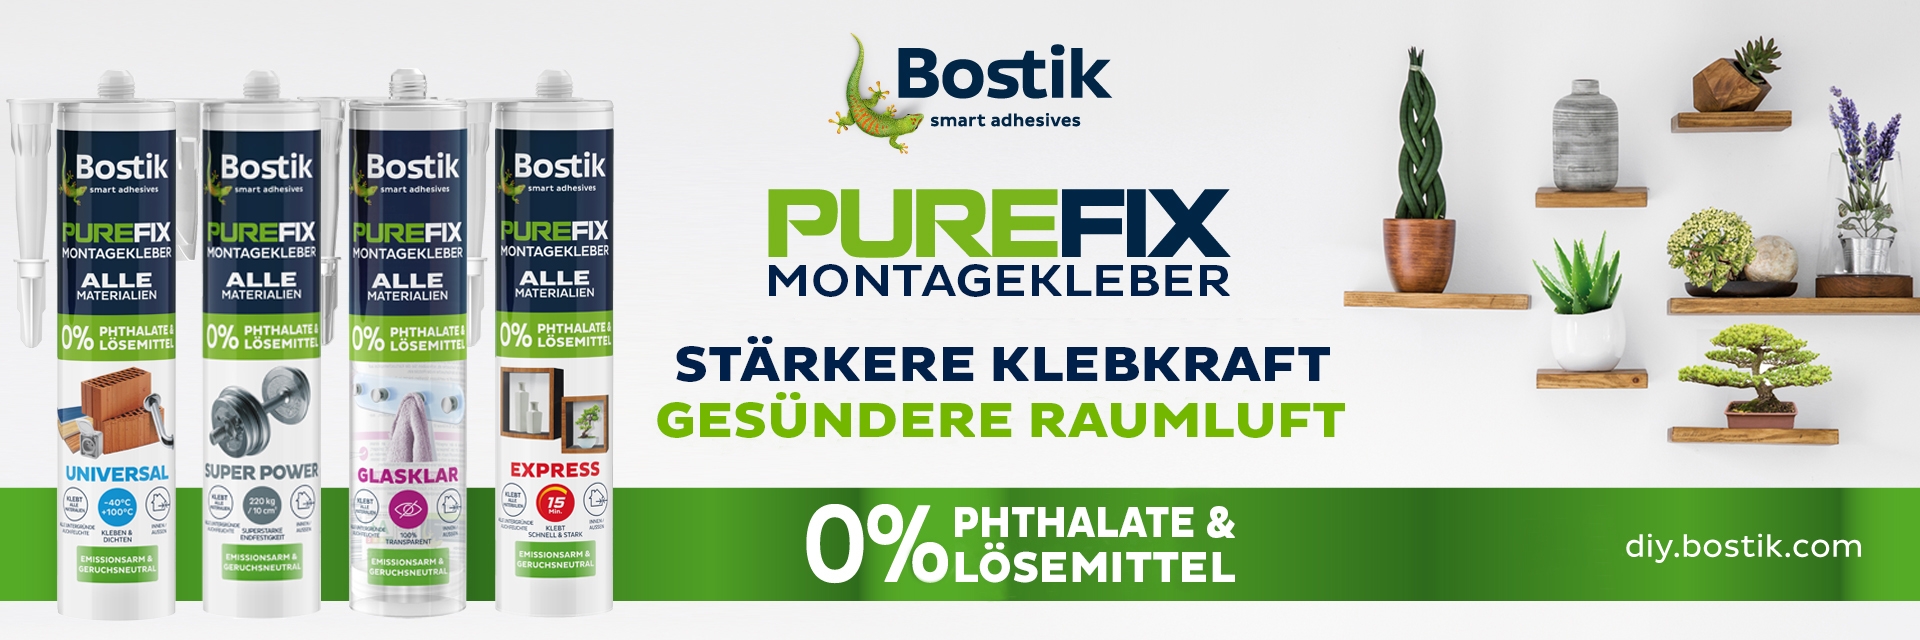 Bostik DIY Germany bonding Purefix banner image